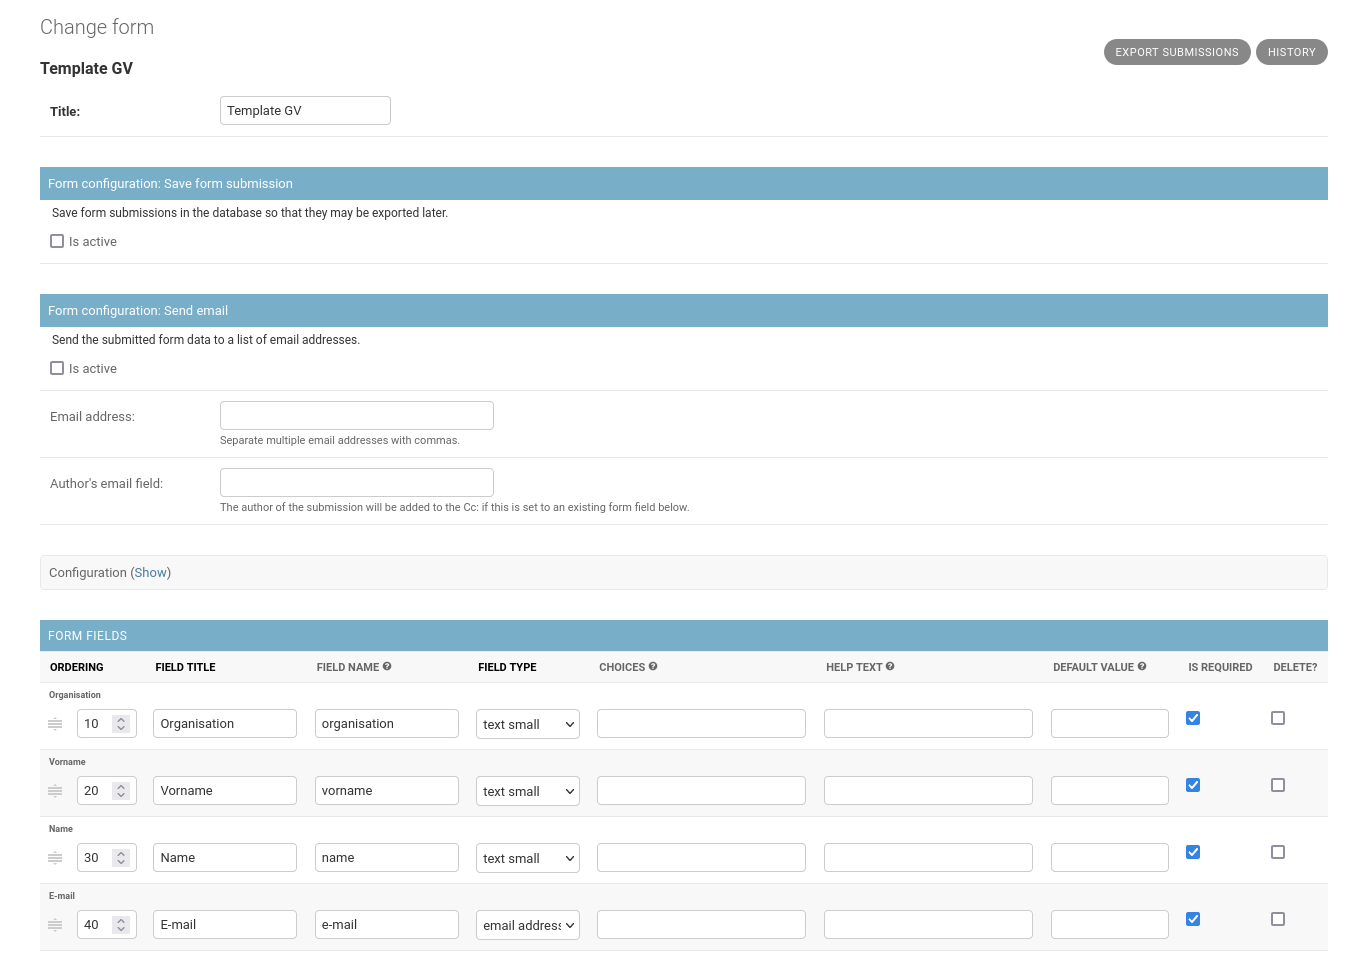 A screenshot of the admin interface